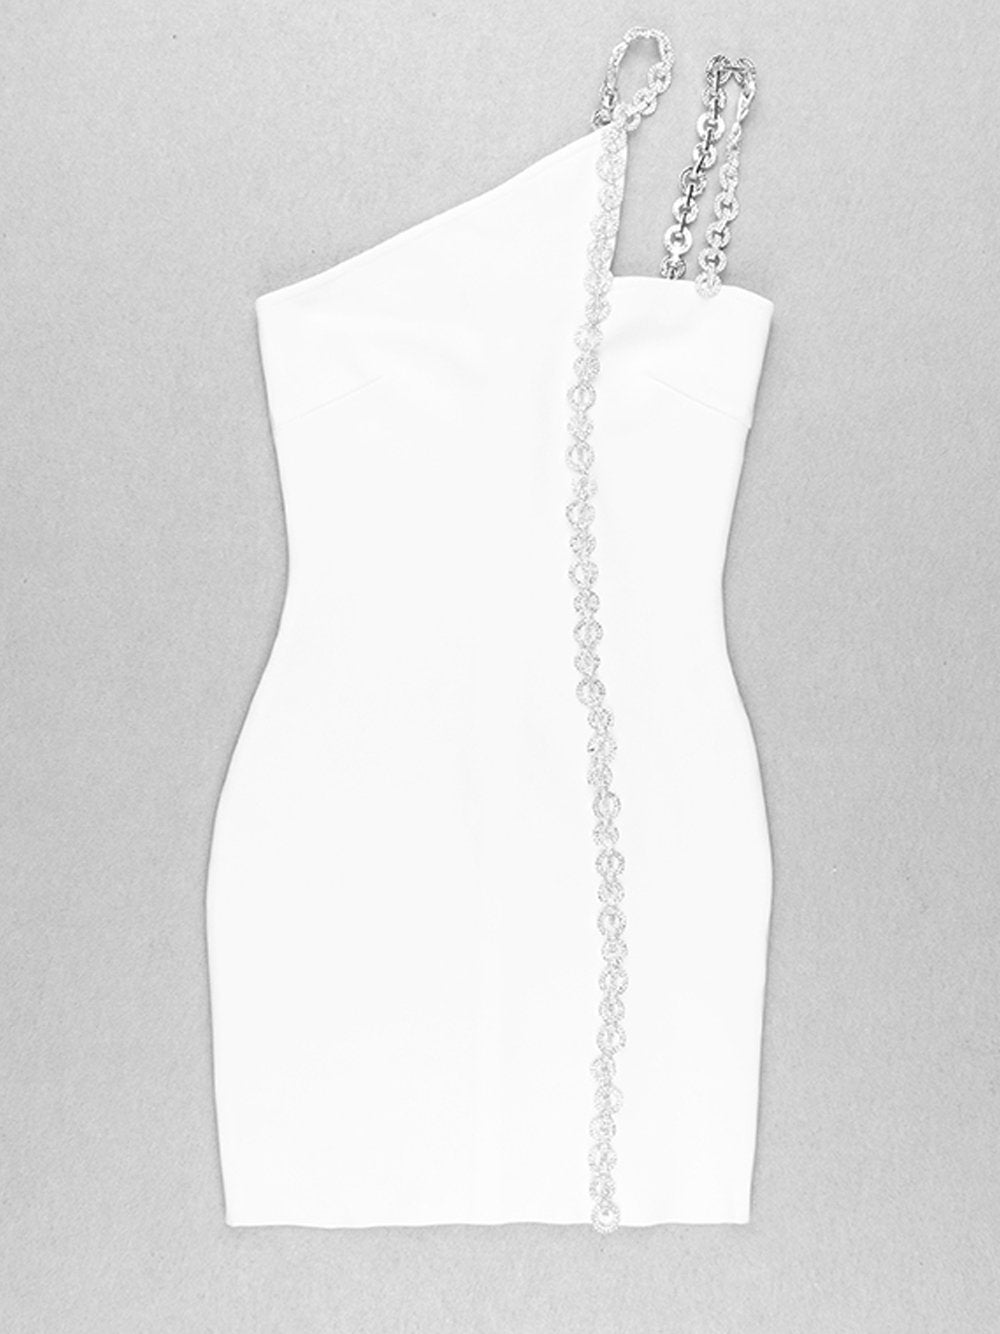 ARDA Chains Mini Dress w Neckless in White